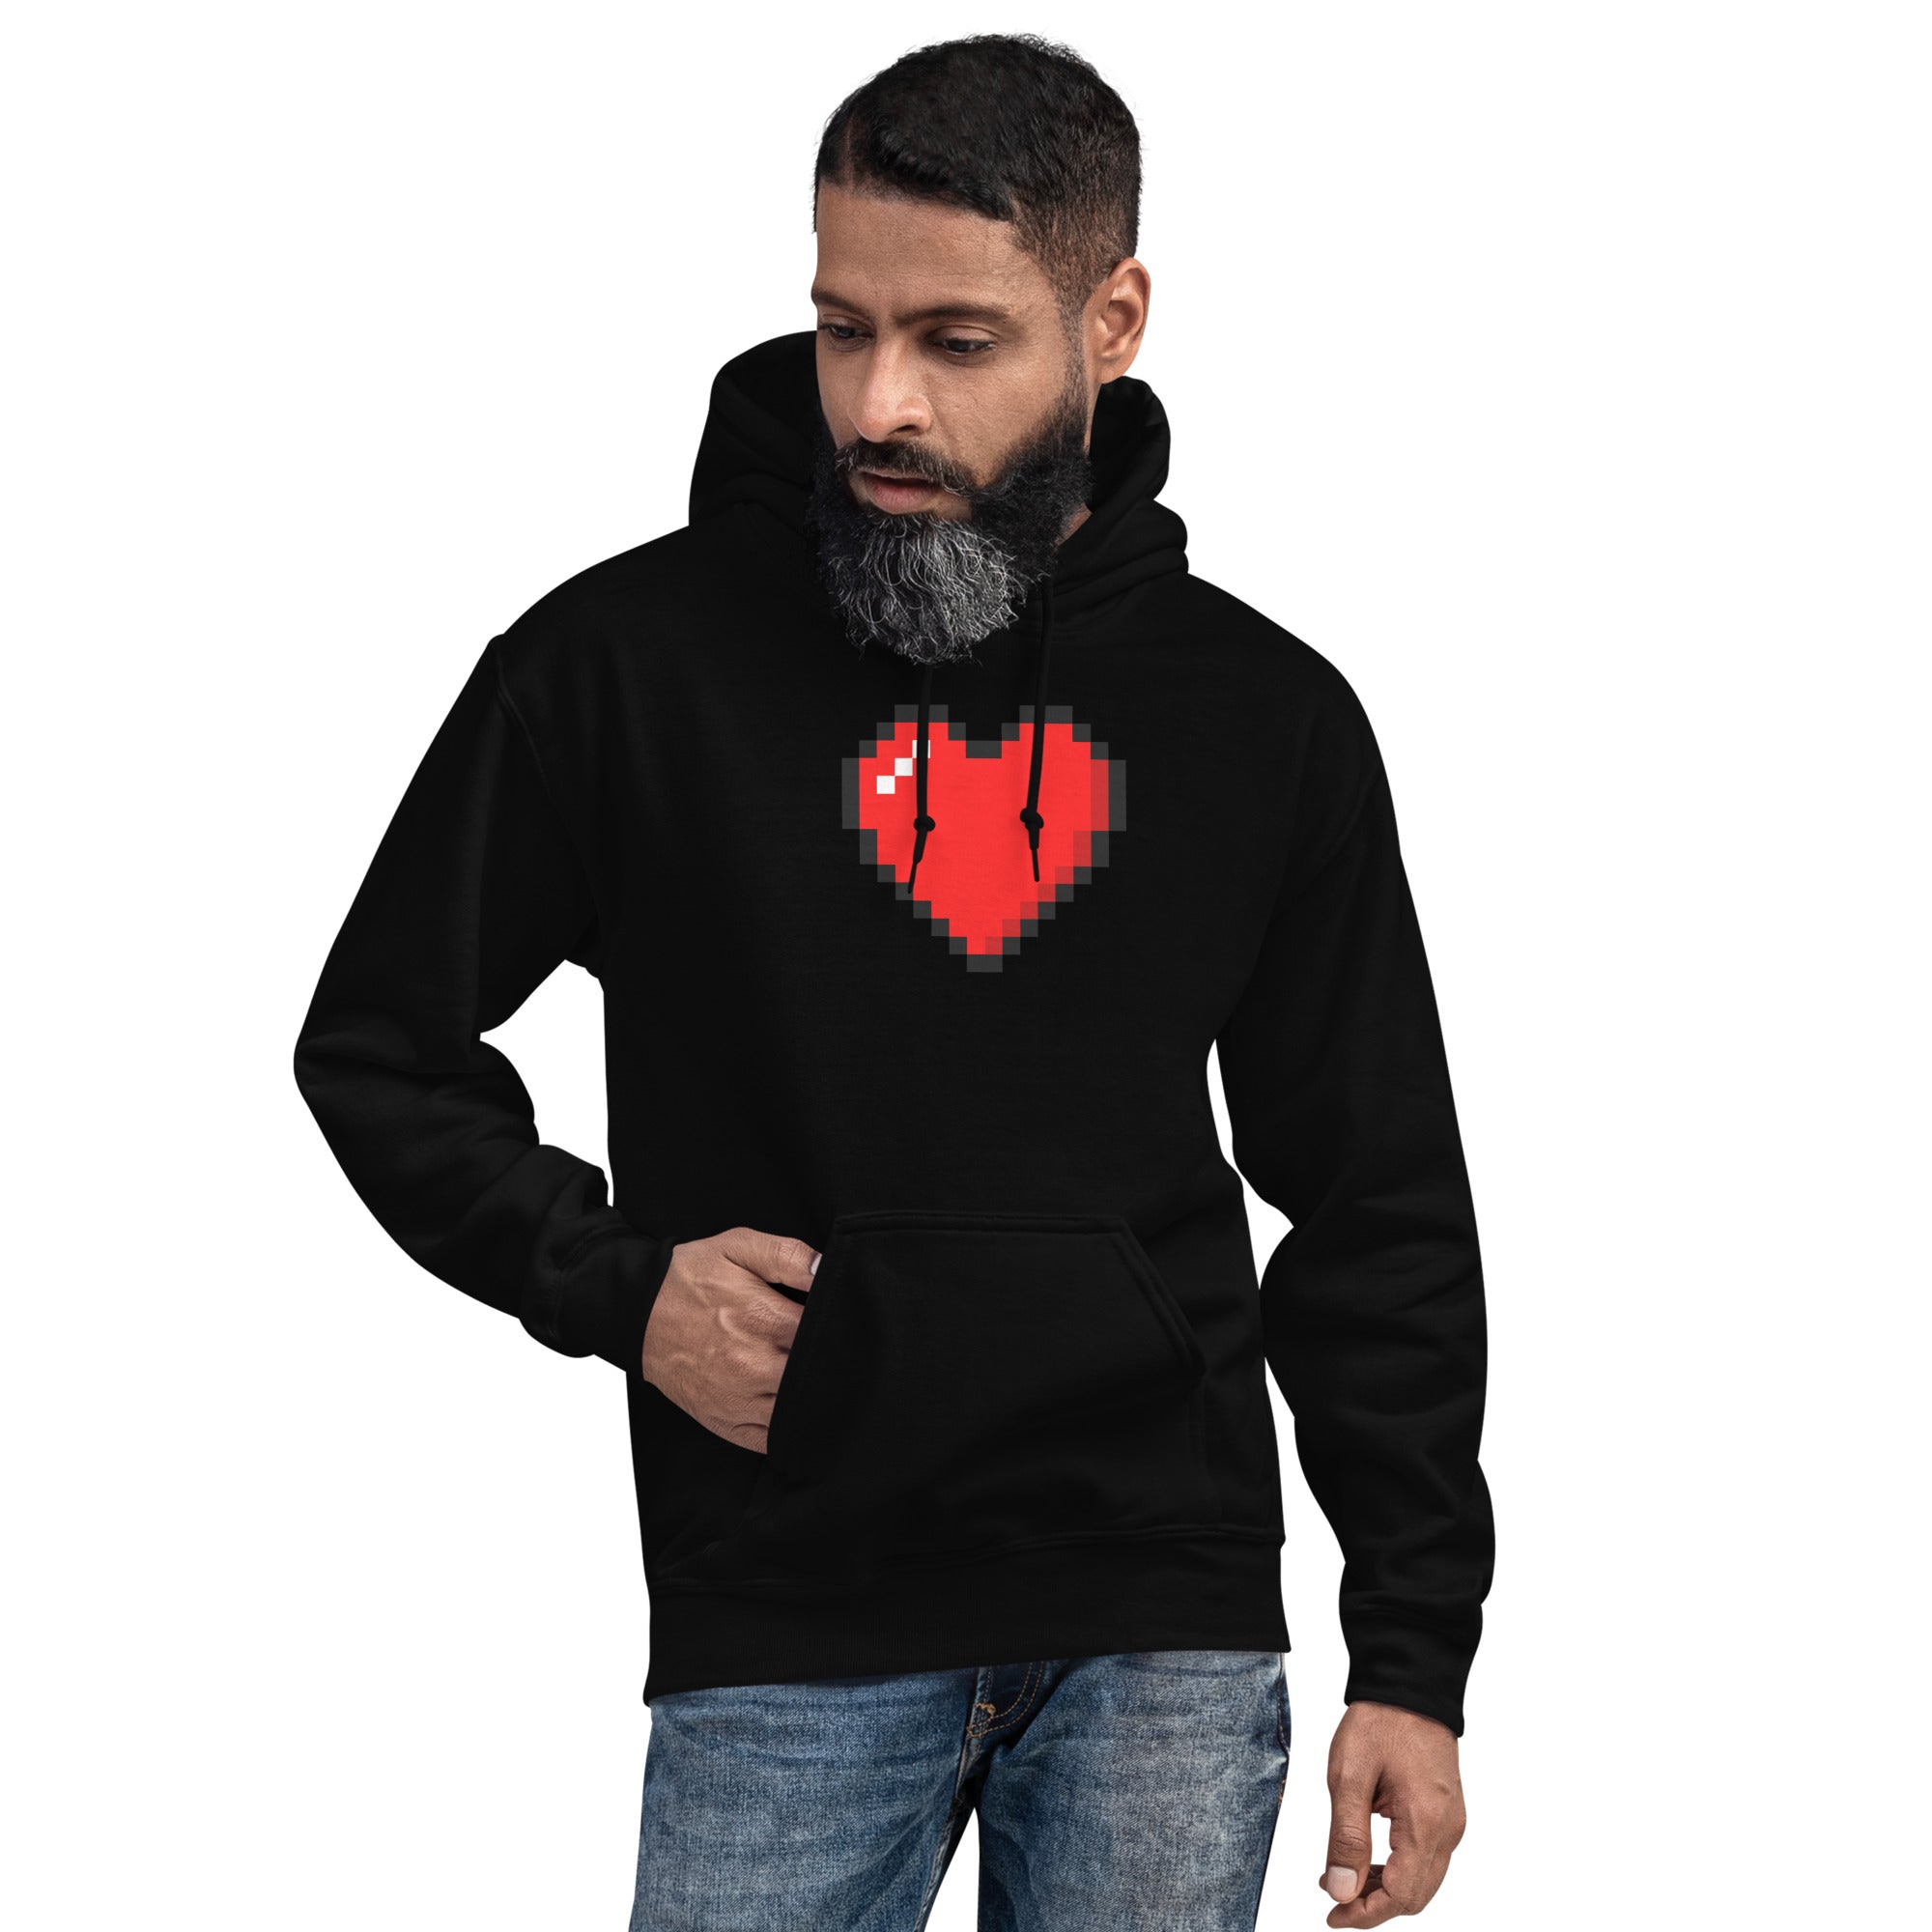 Retro 8 Bit Video Game Pixelated Heart Unisex Hoodie Sweatshirt